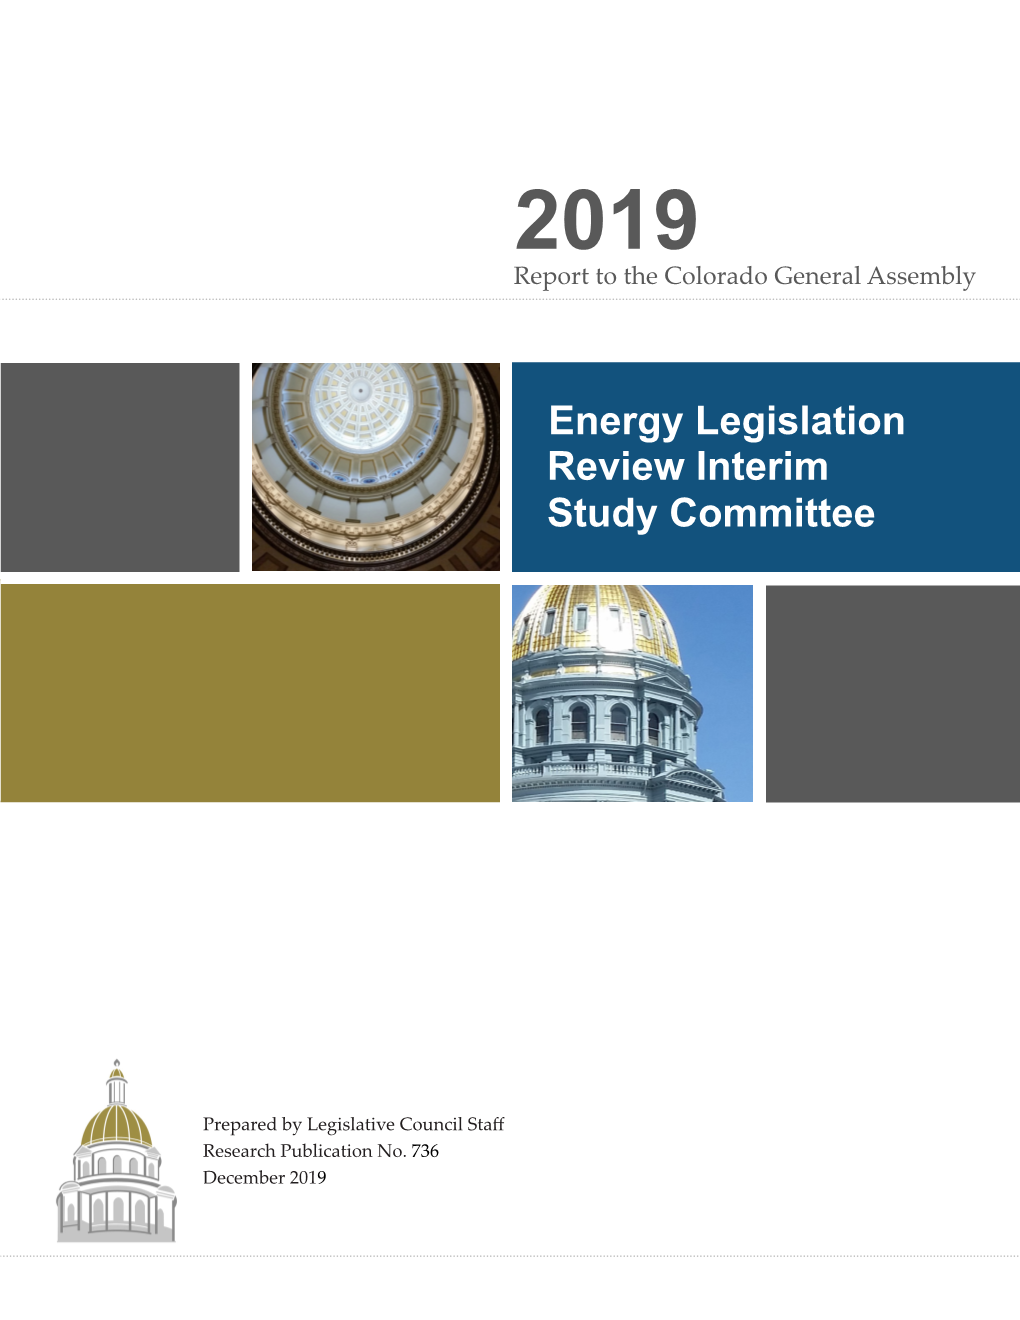 Energy Legislation Review Interim Study Committee